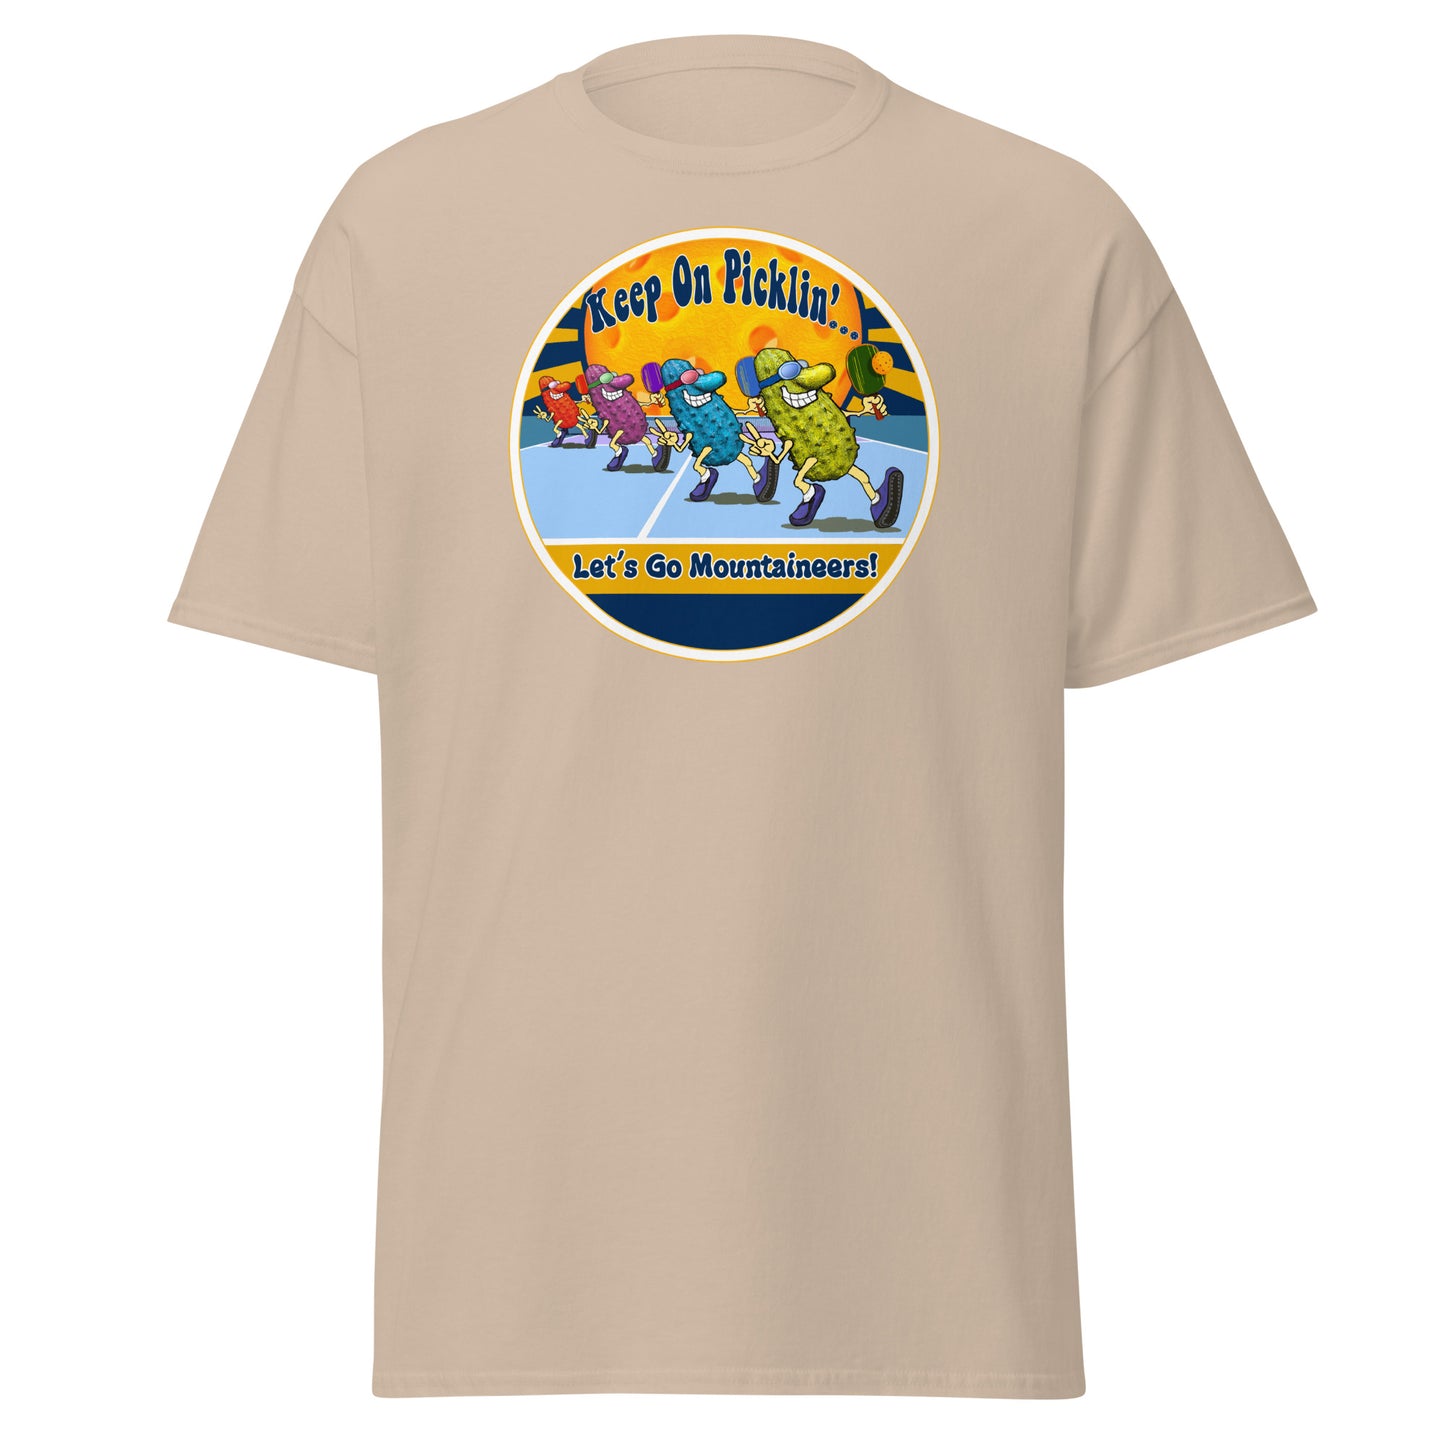 West Virginia Mountaineers Pickleball Shirt, Short-sleeve Tee, Pickleball Sun Graphic